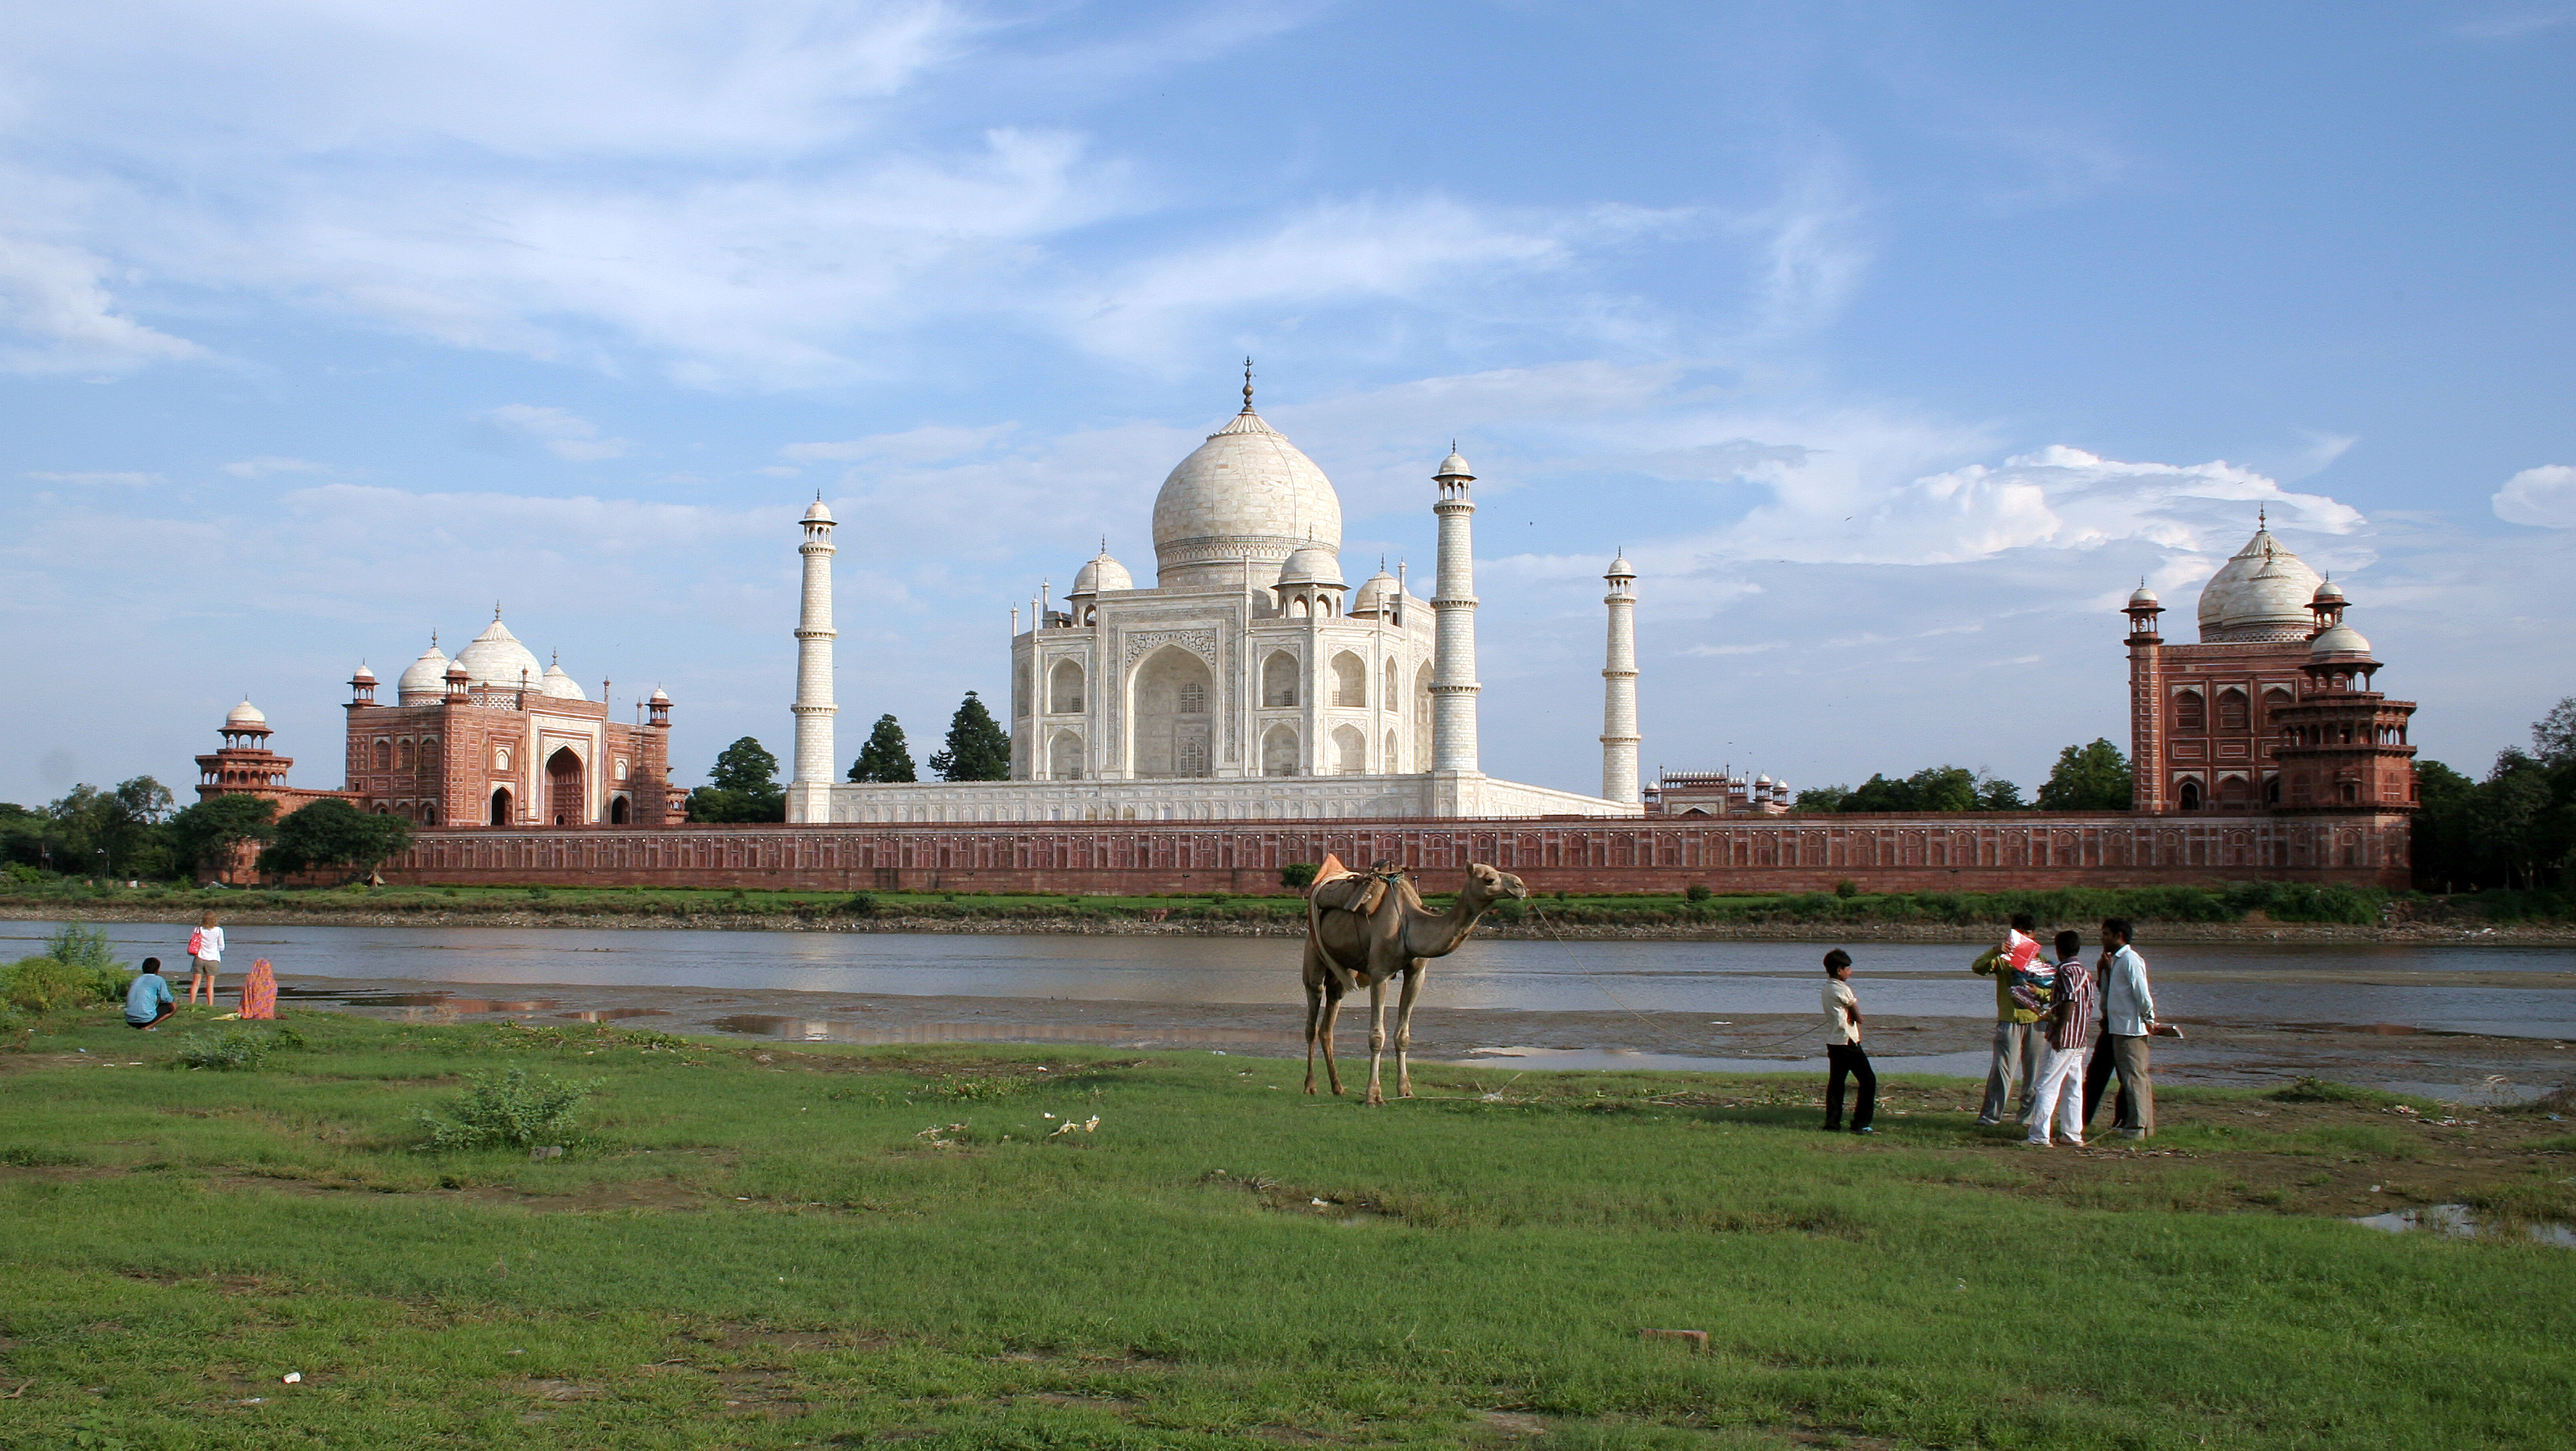 File:Taj Mahal-11.jpg - Wikipedia, the free encyclopedia